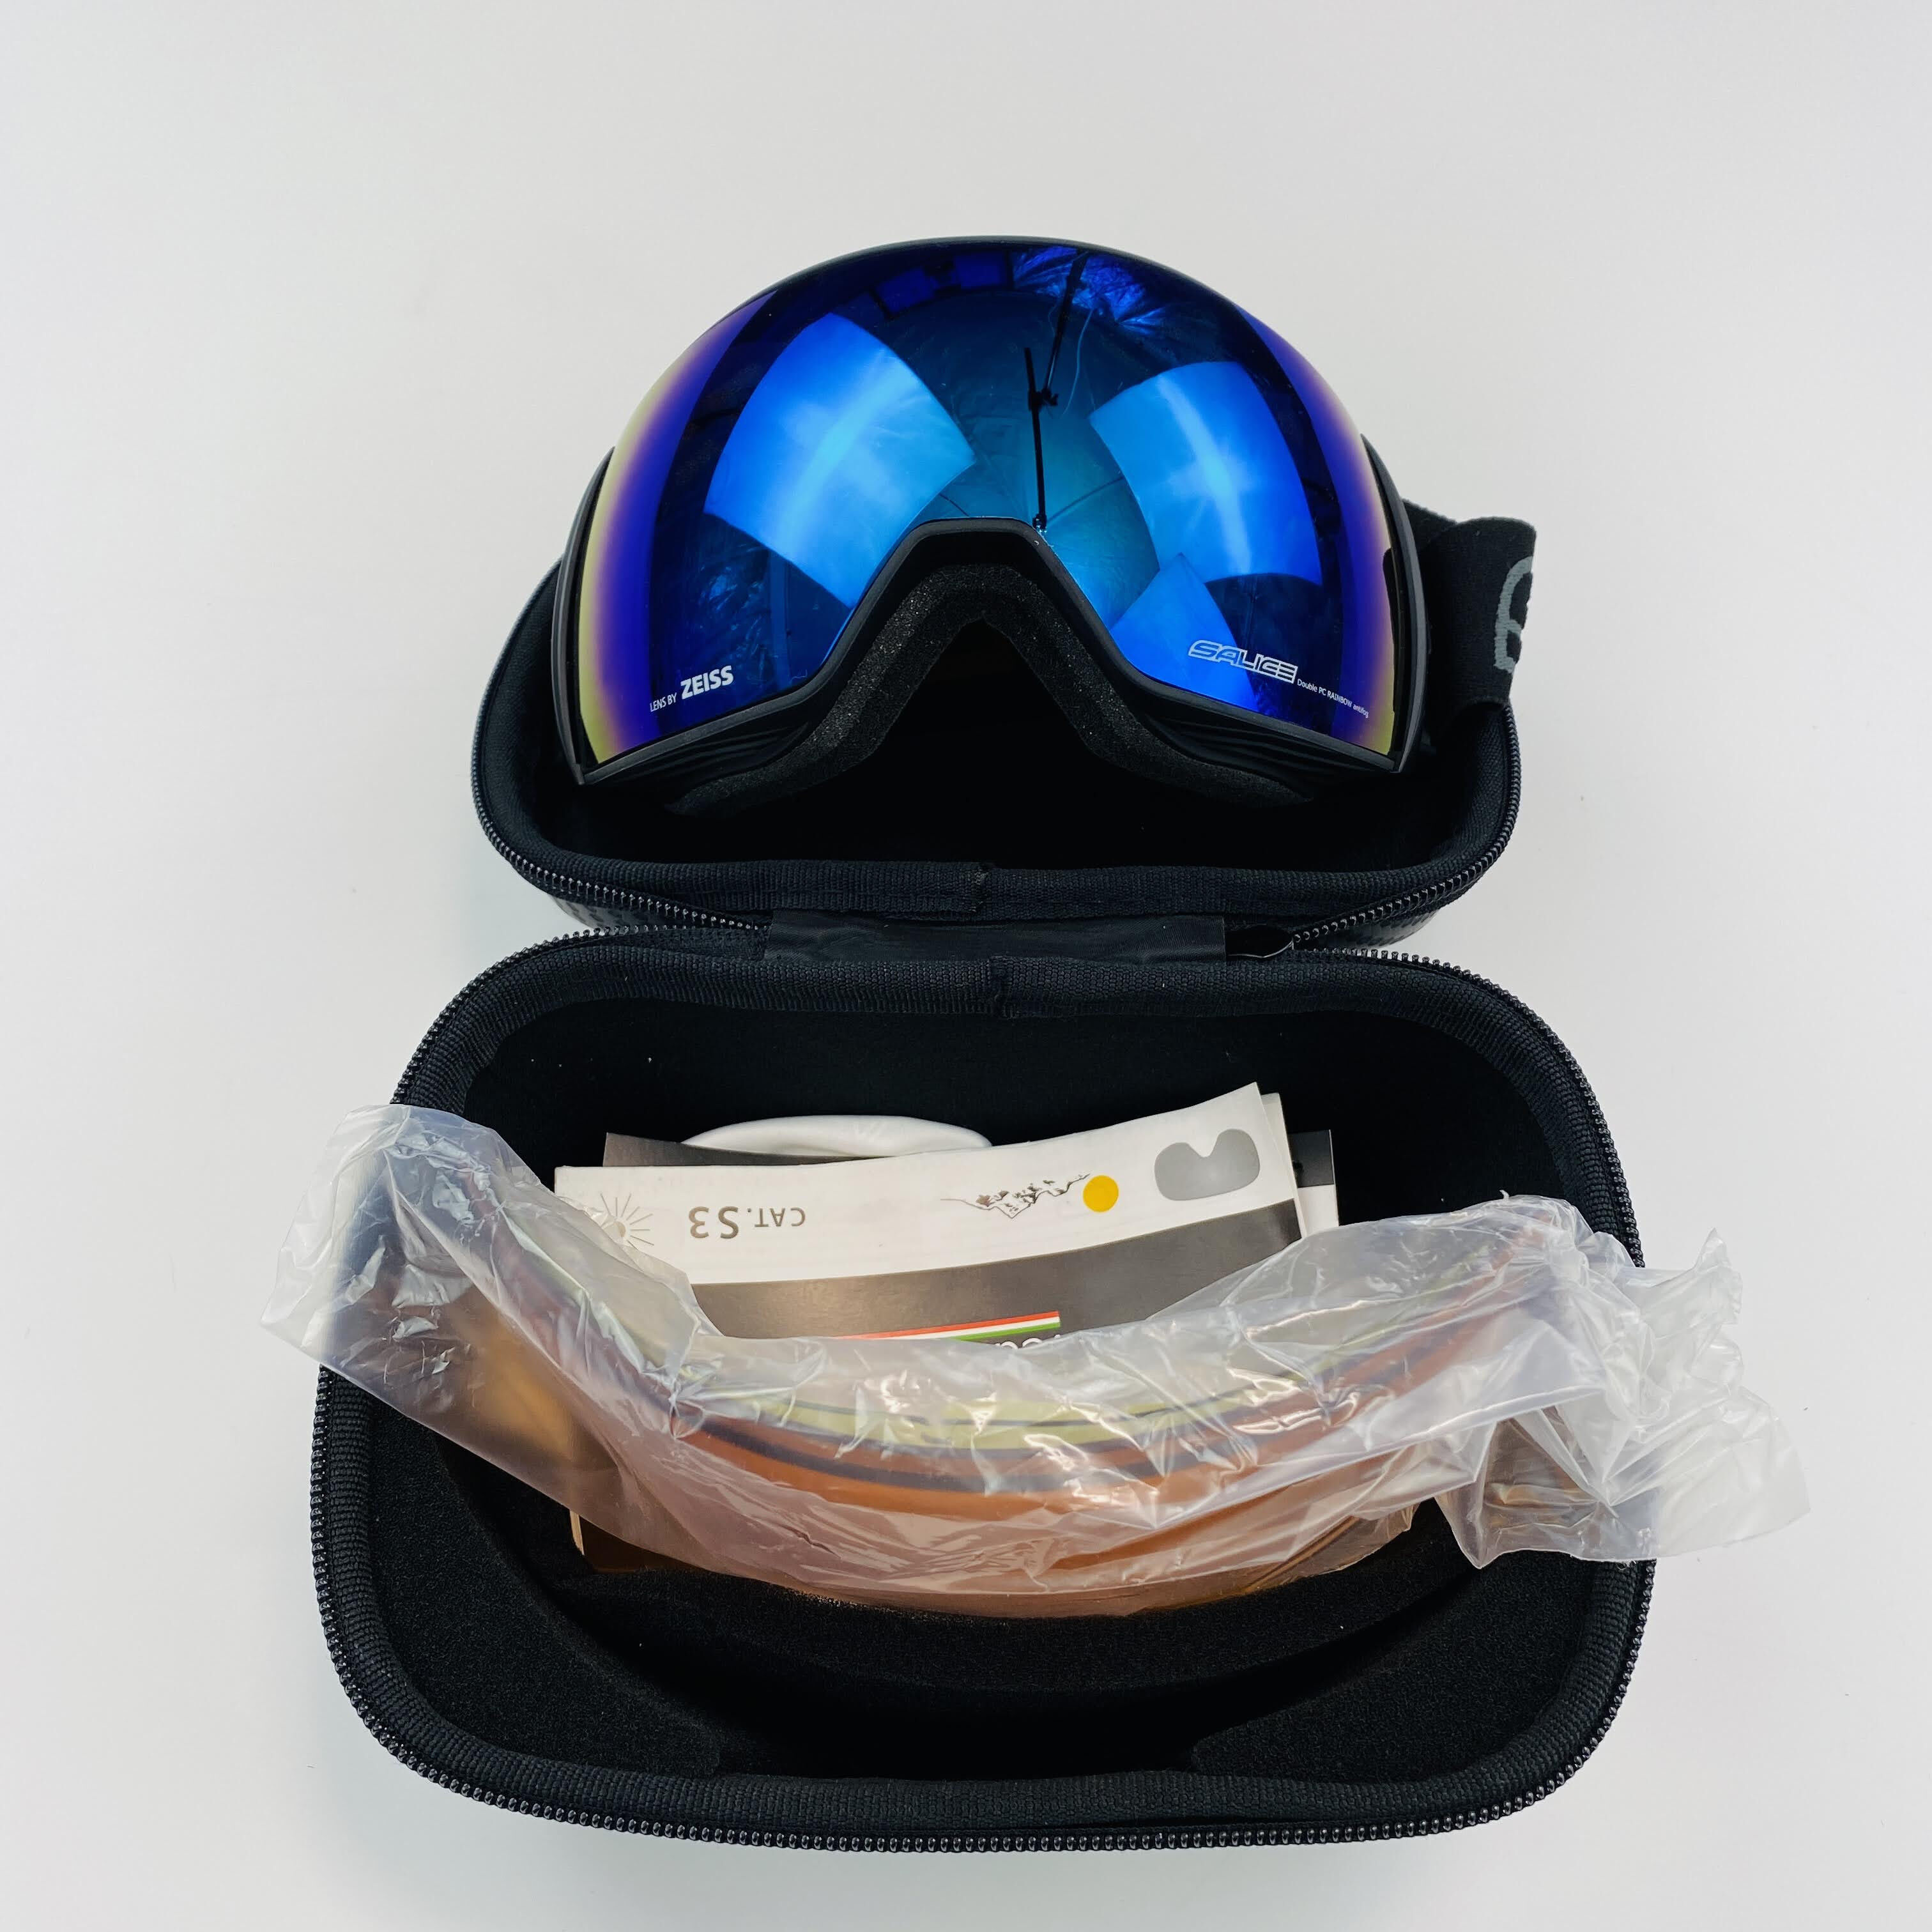 Salice Salice 605 - Seconde main Masque ski homme - Bleu - Taille unique | Hardloop